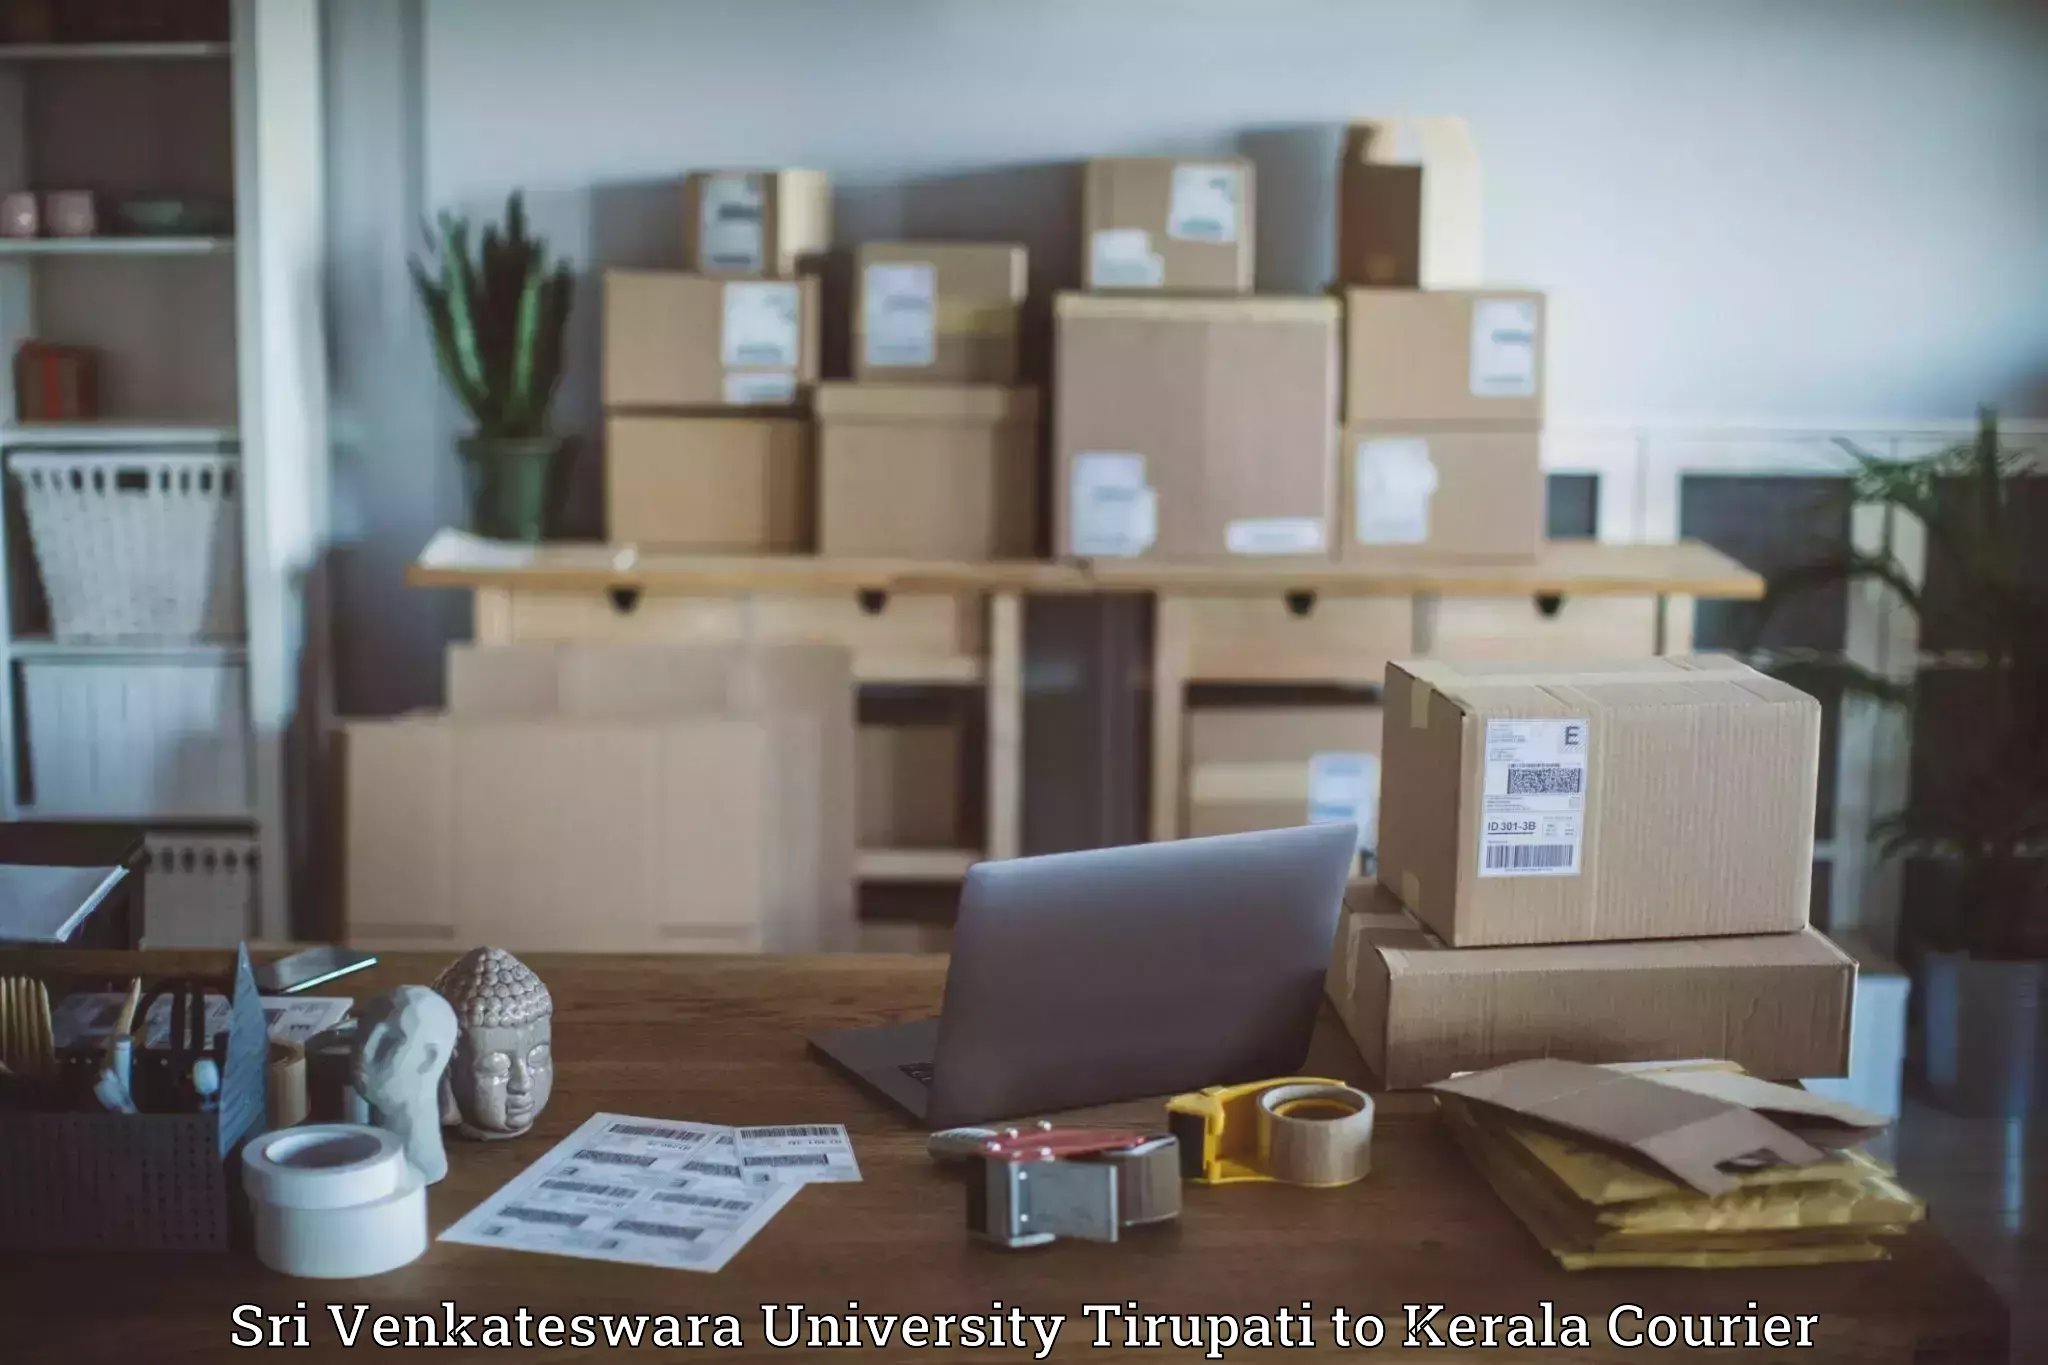 Express delivery network Sri Venkateswara University Tirupati to Kottayam